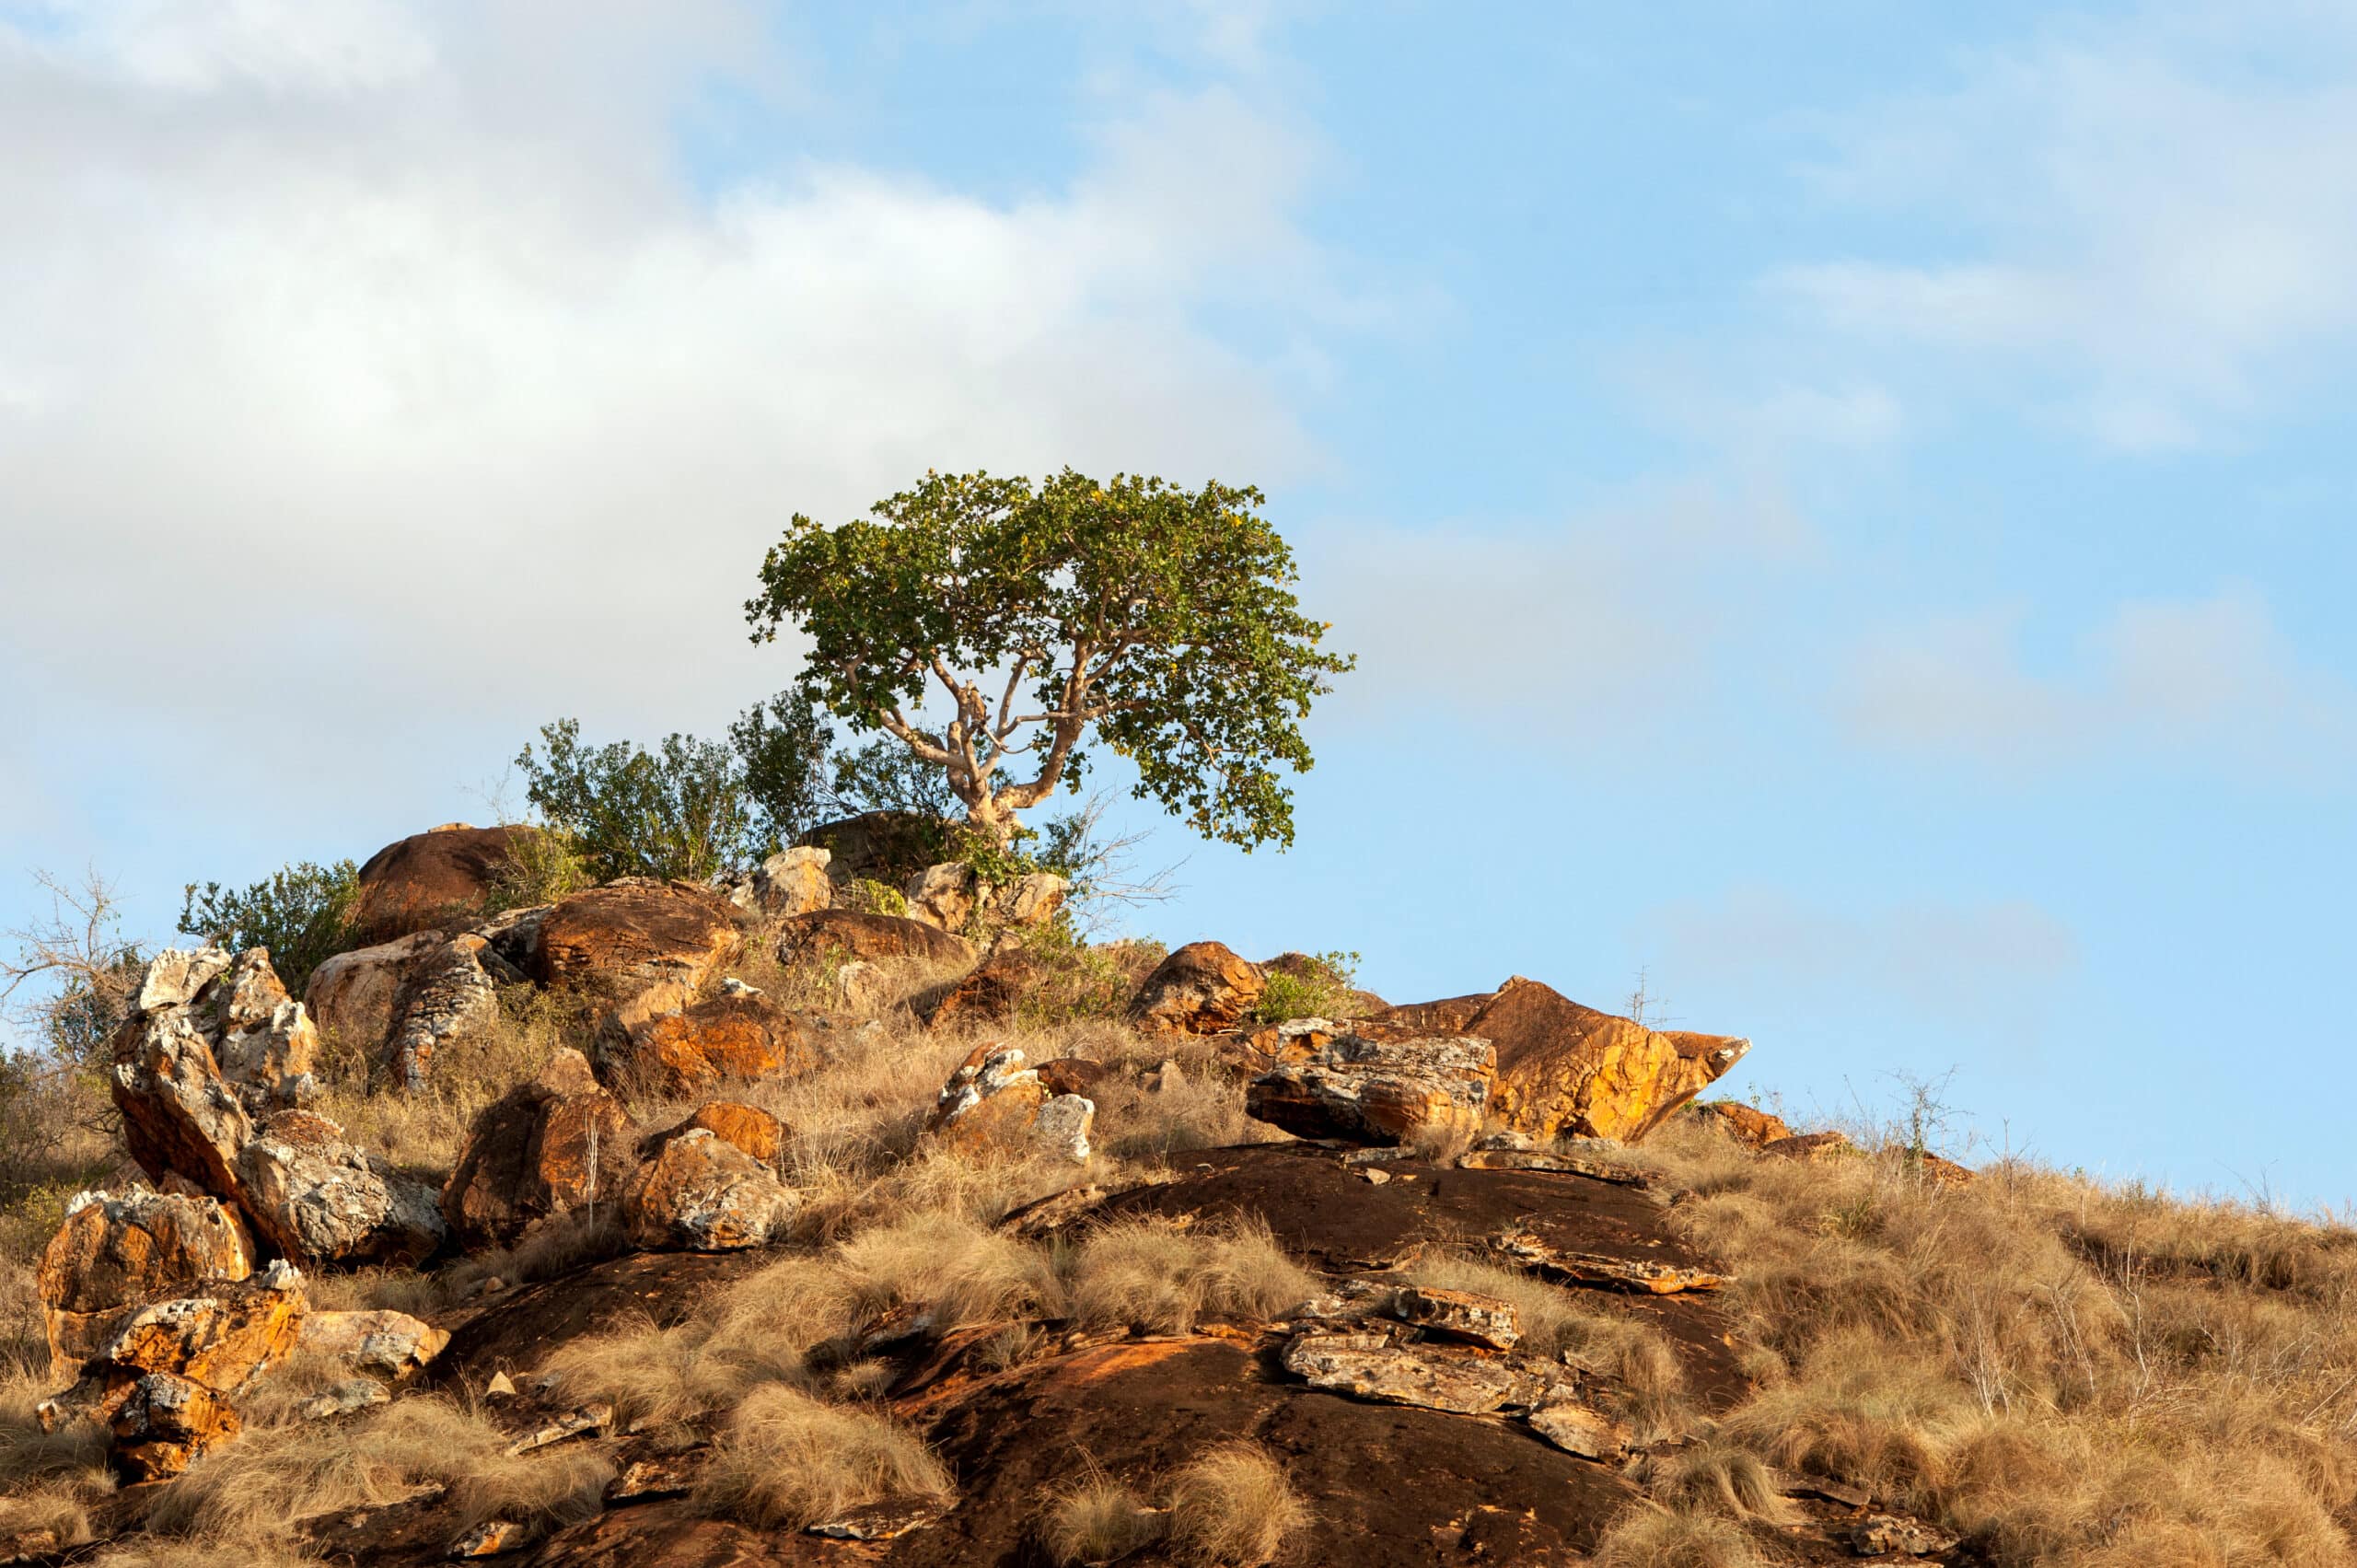 savannah landscape in the national park of kenya 2021 08 26 15 55 55 utc scaled